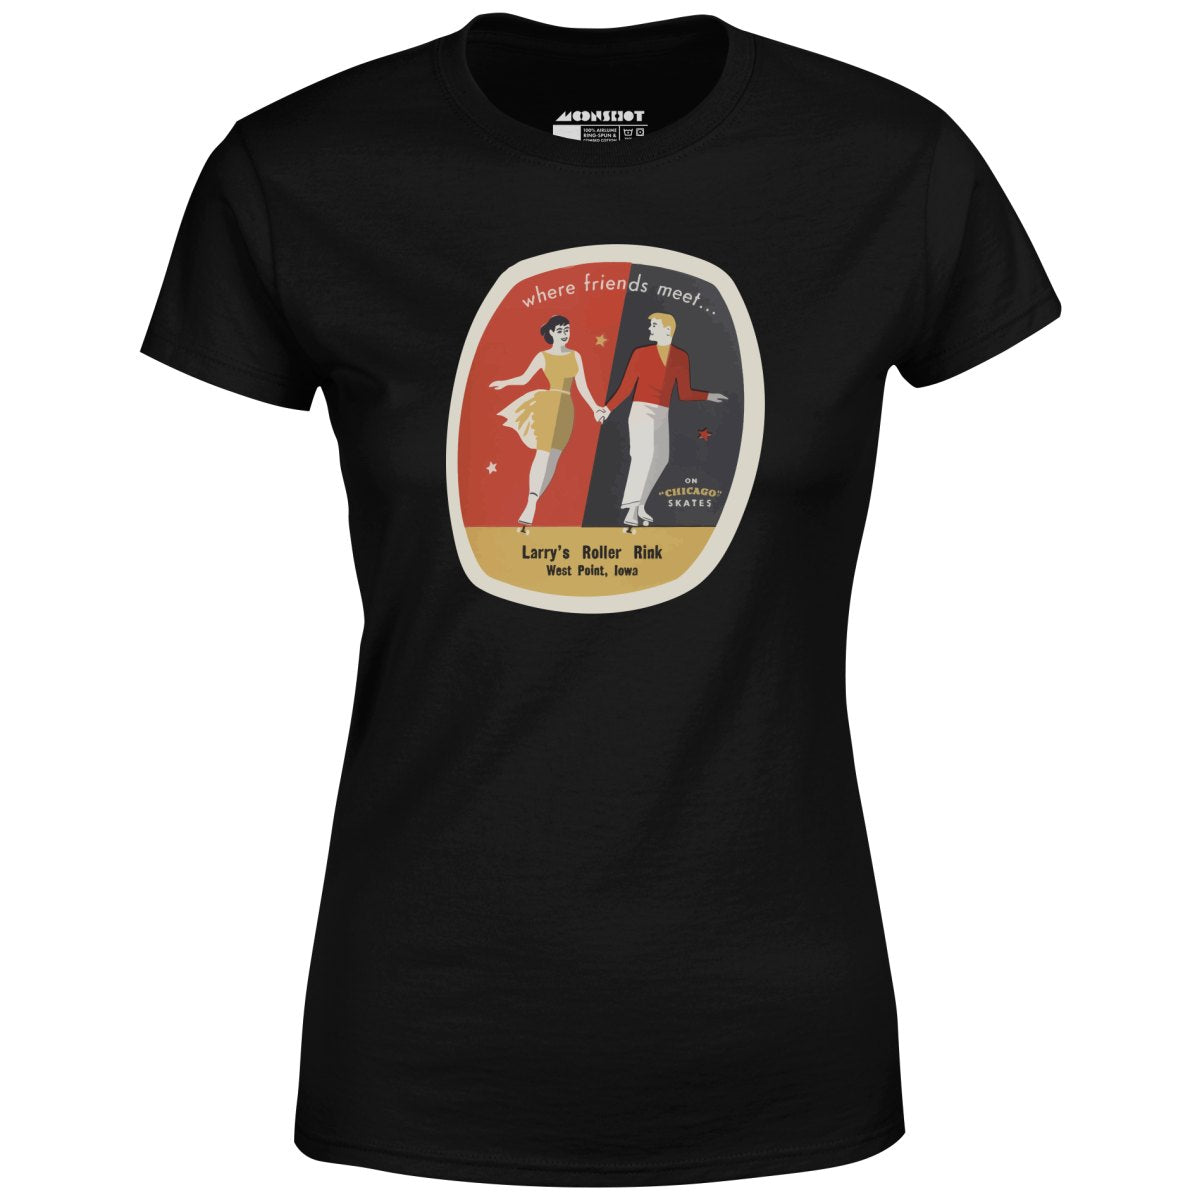 Larry's Roller Rink - West Point, IA - Vintage Roller Rink - Women's T-Shirt